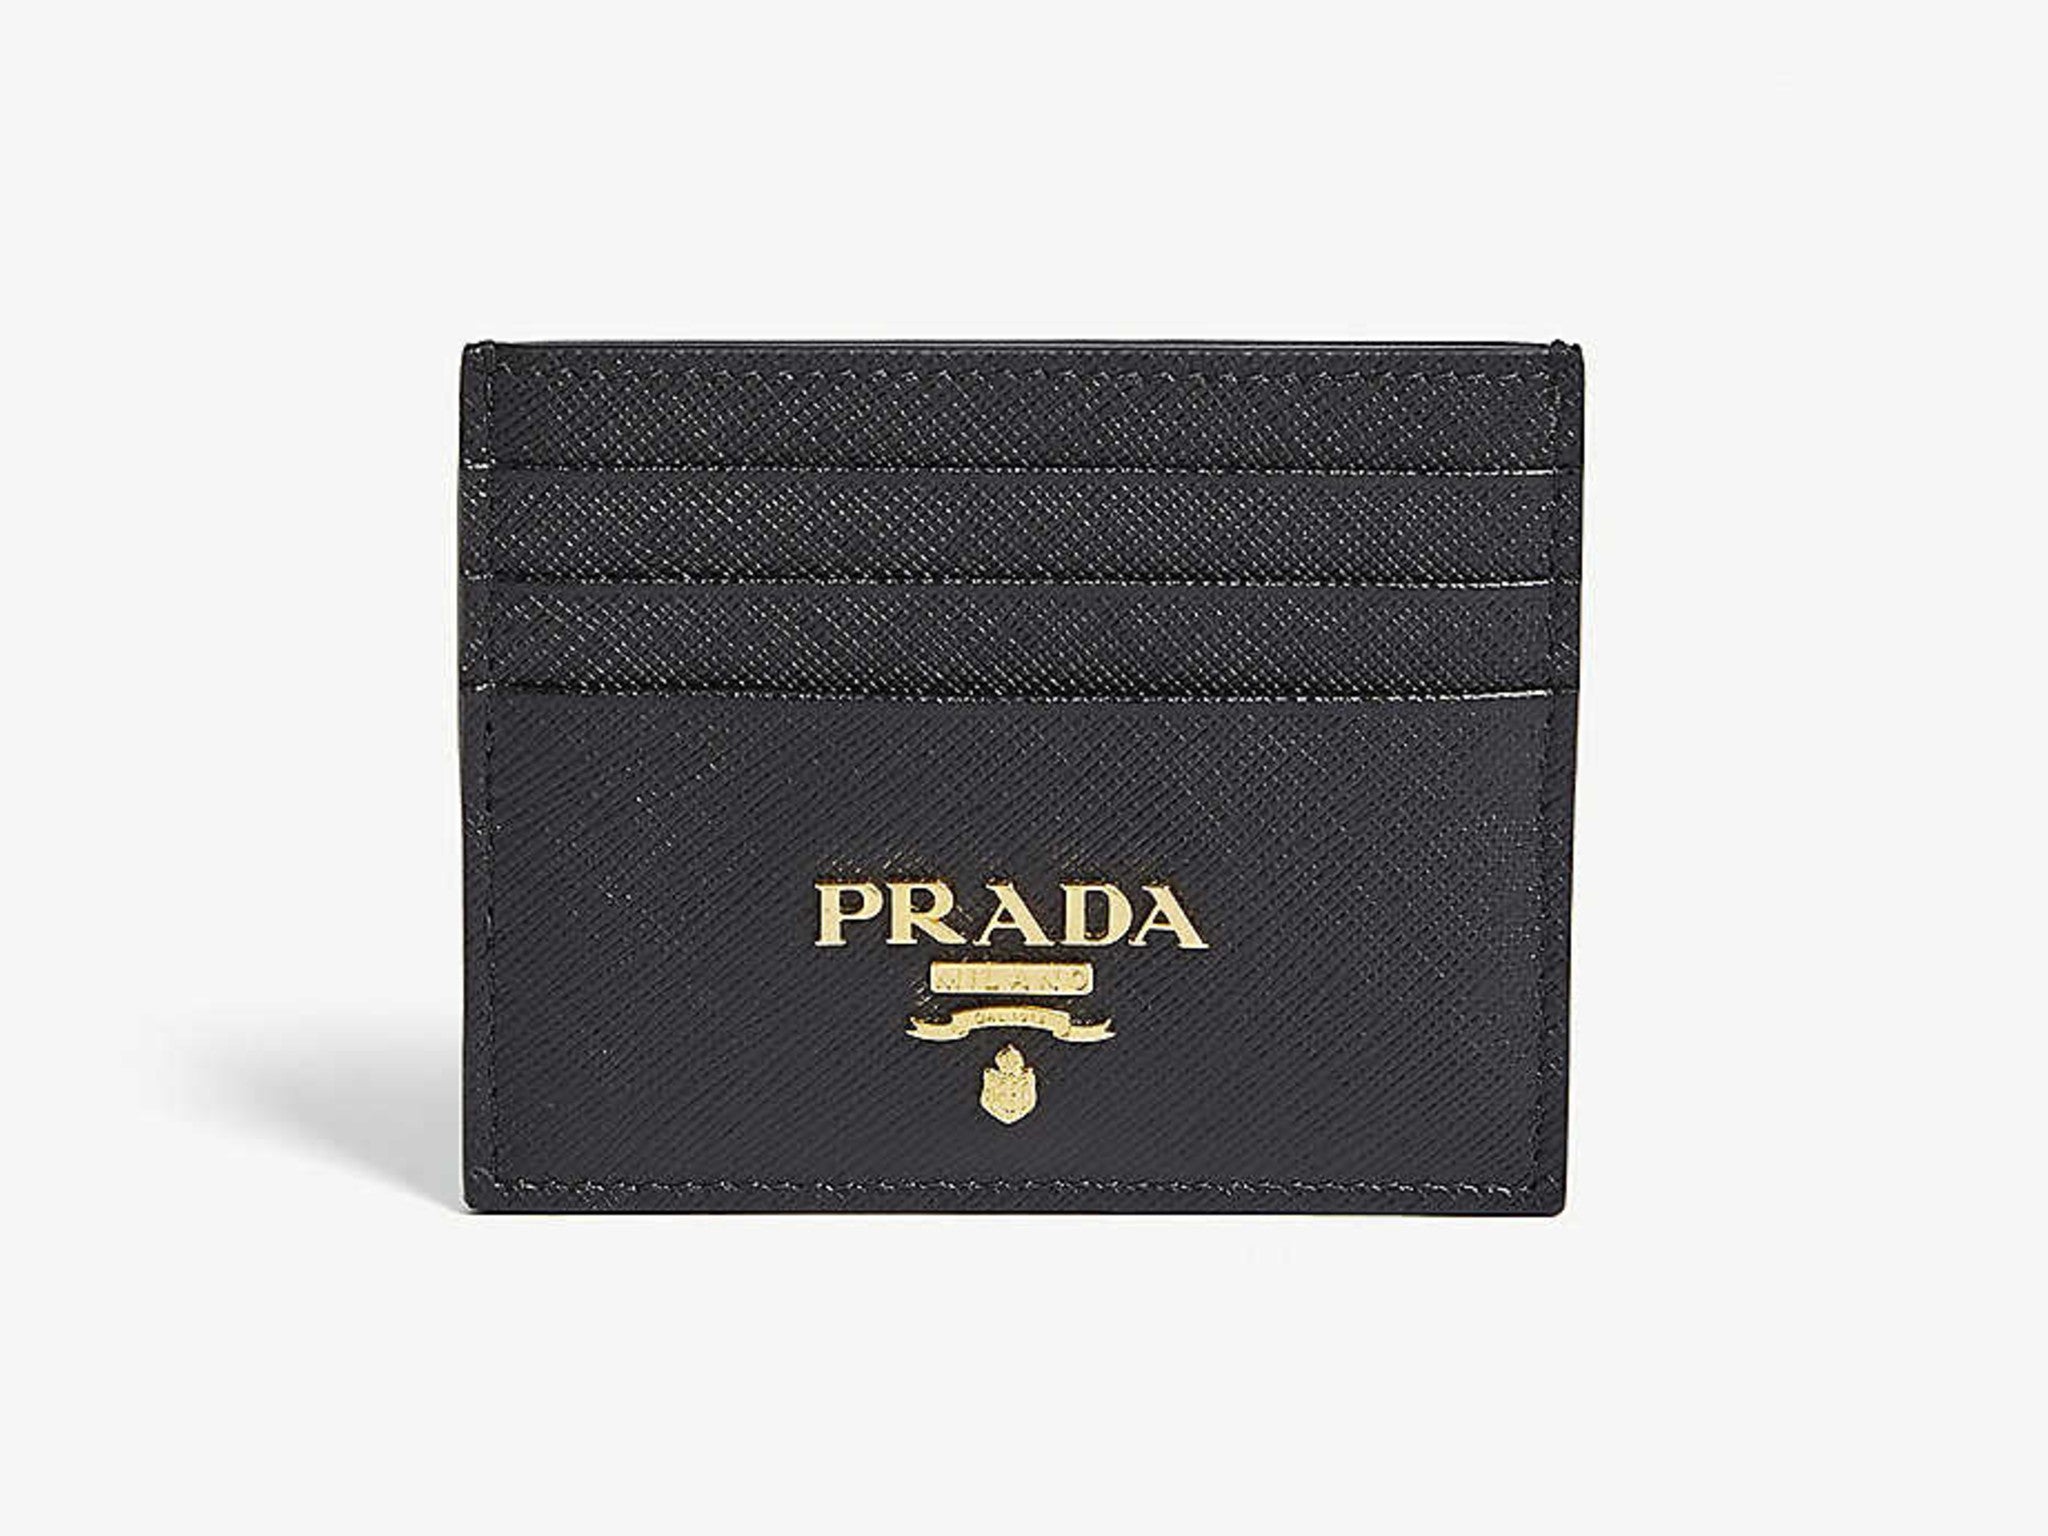 Prada the classic saffiano leather card holder indybest.jpeg